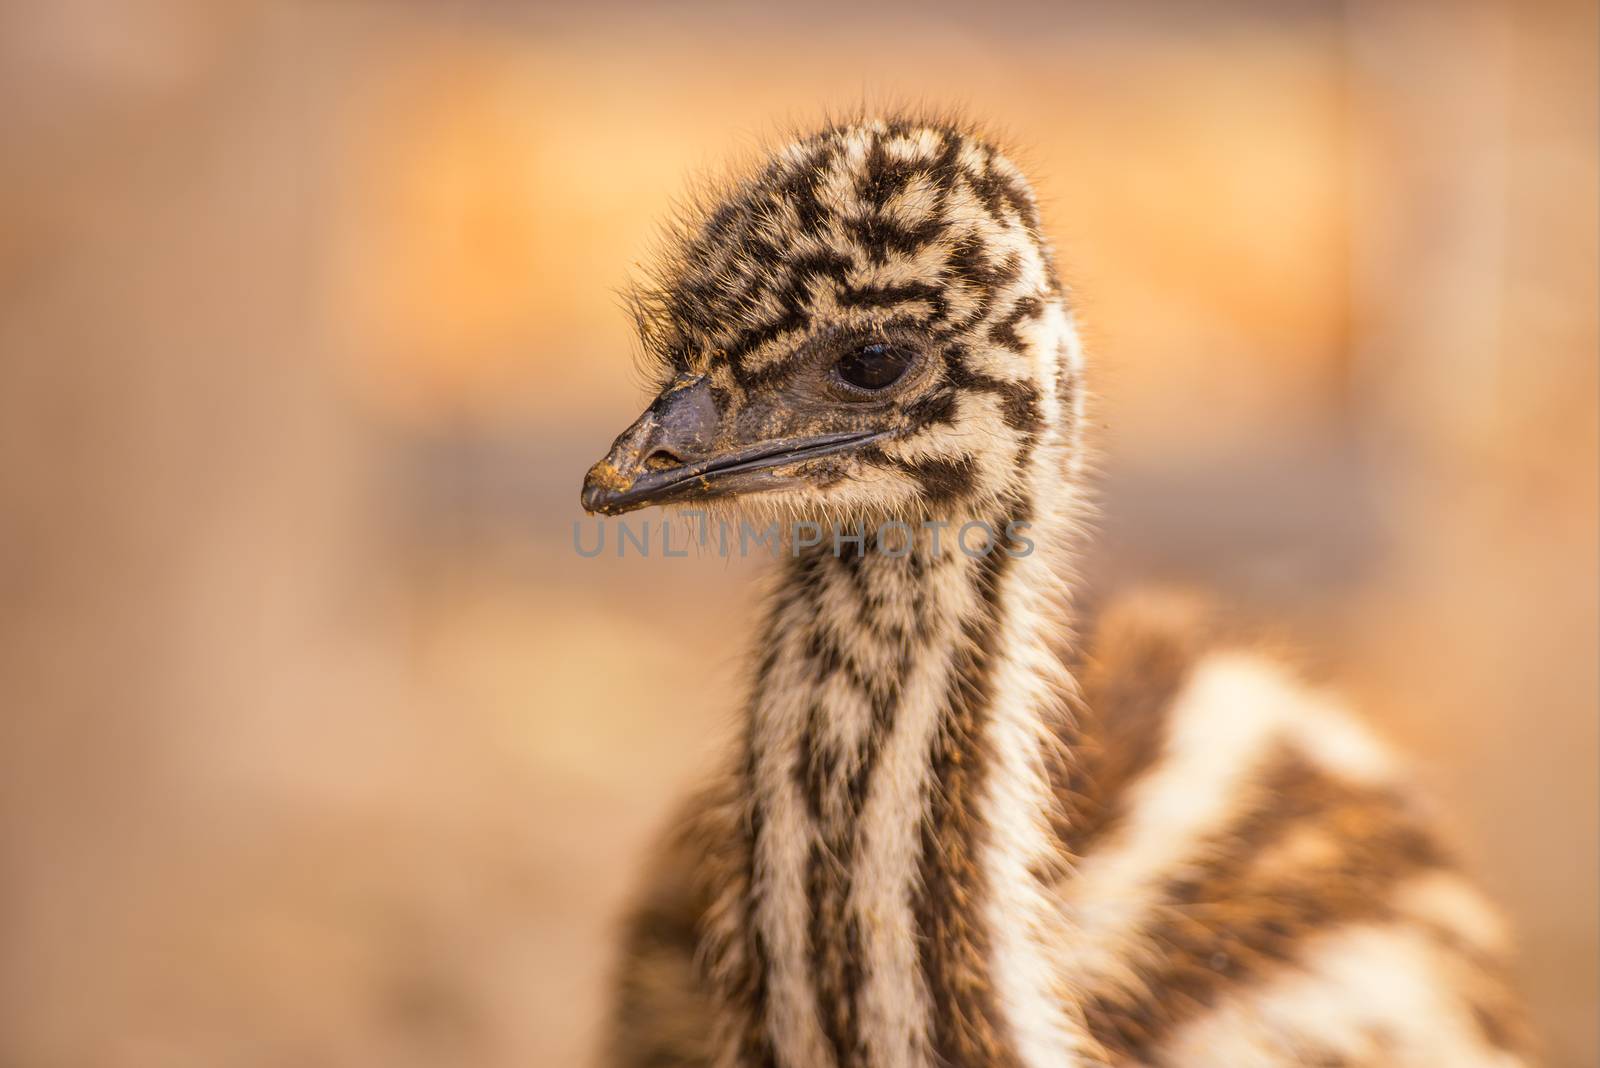 Portrait of a baby Australian Emu also known as Dromaius novaehollandiae